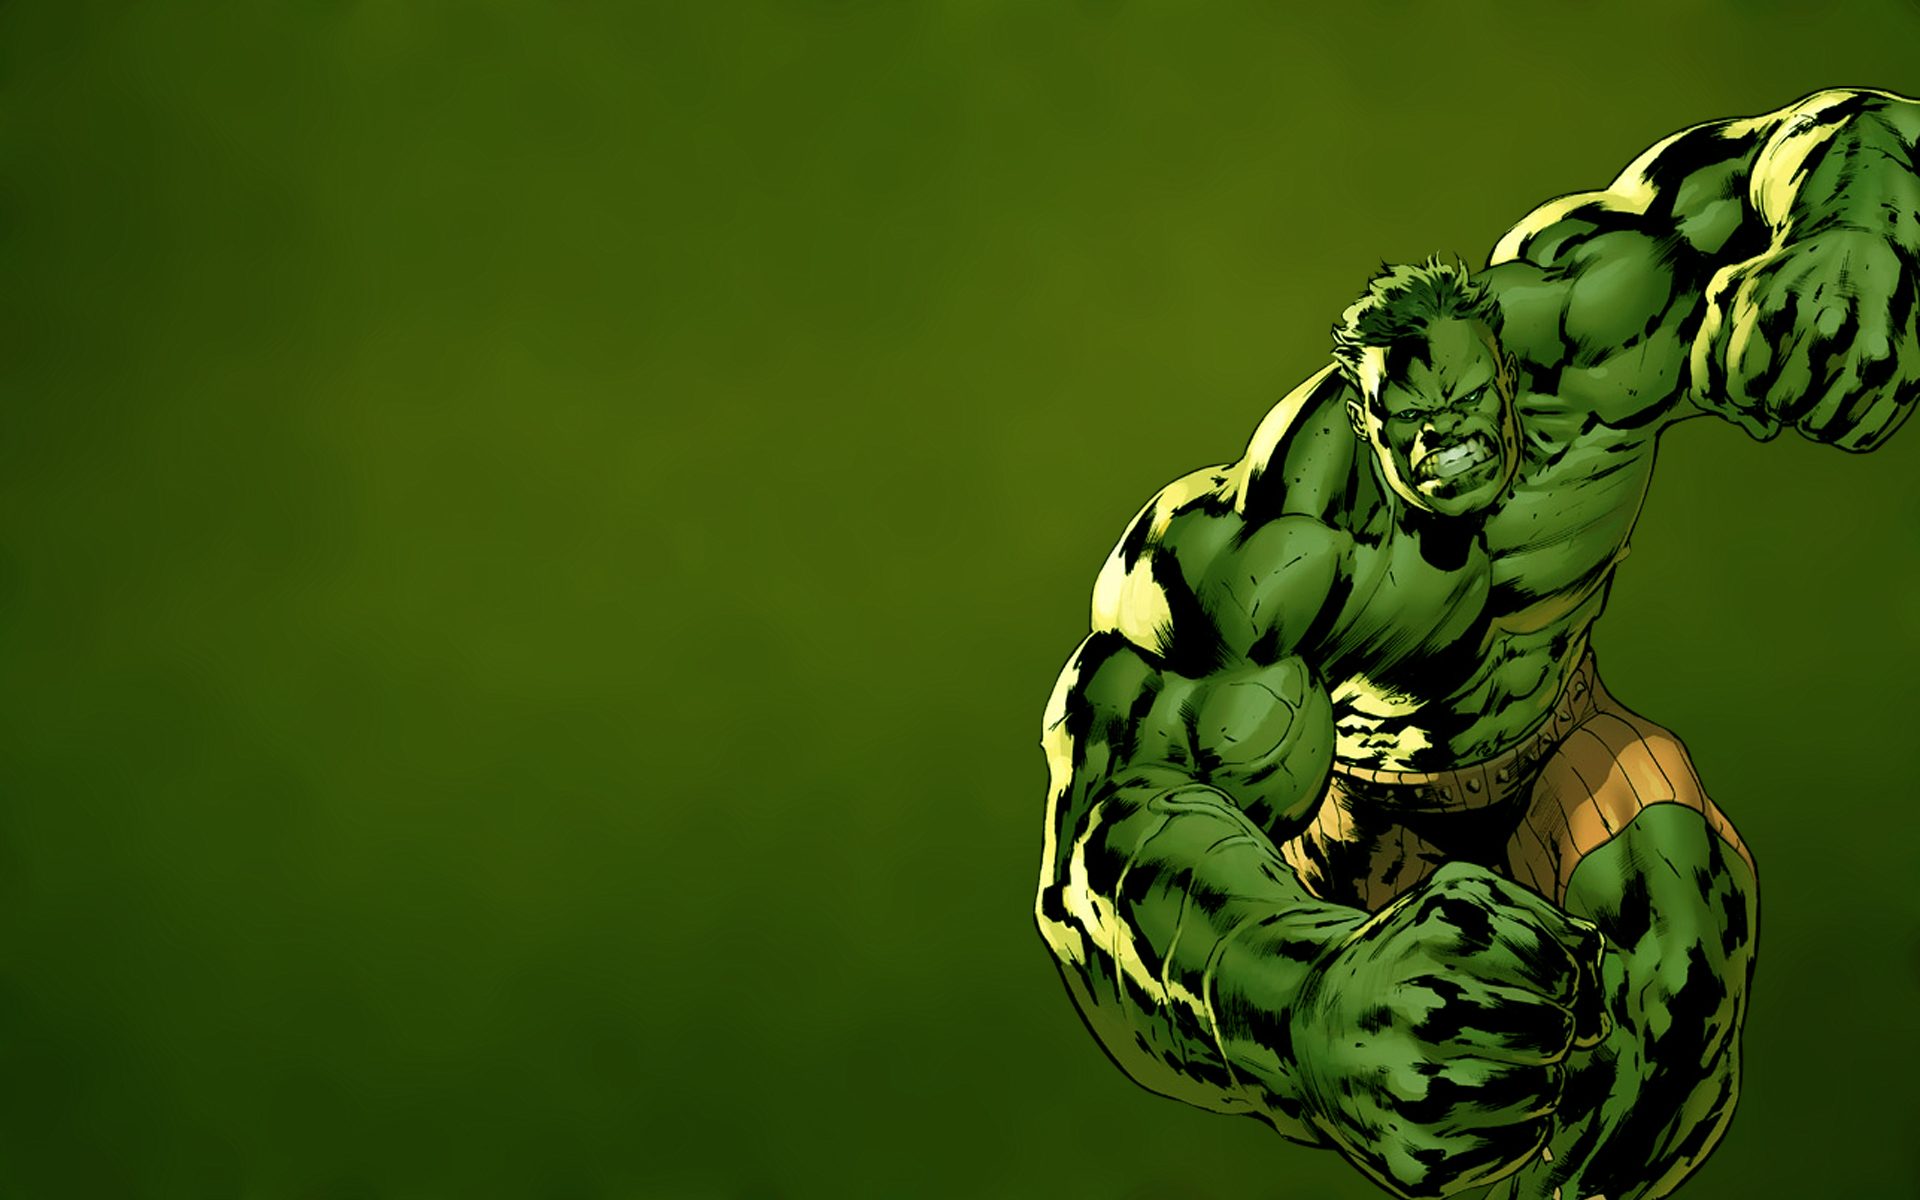 hulk live wallpaper,hulk,green,superhero,fictional character,fiction